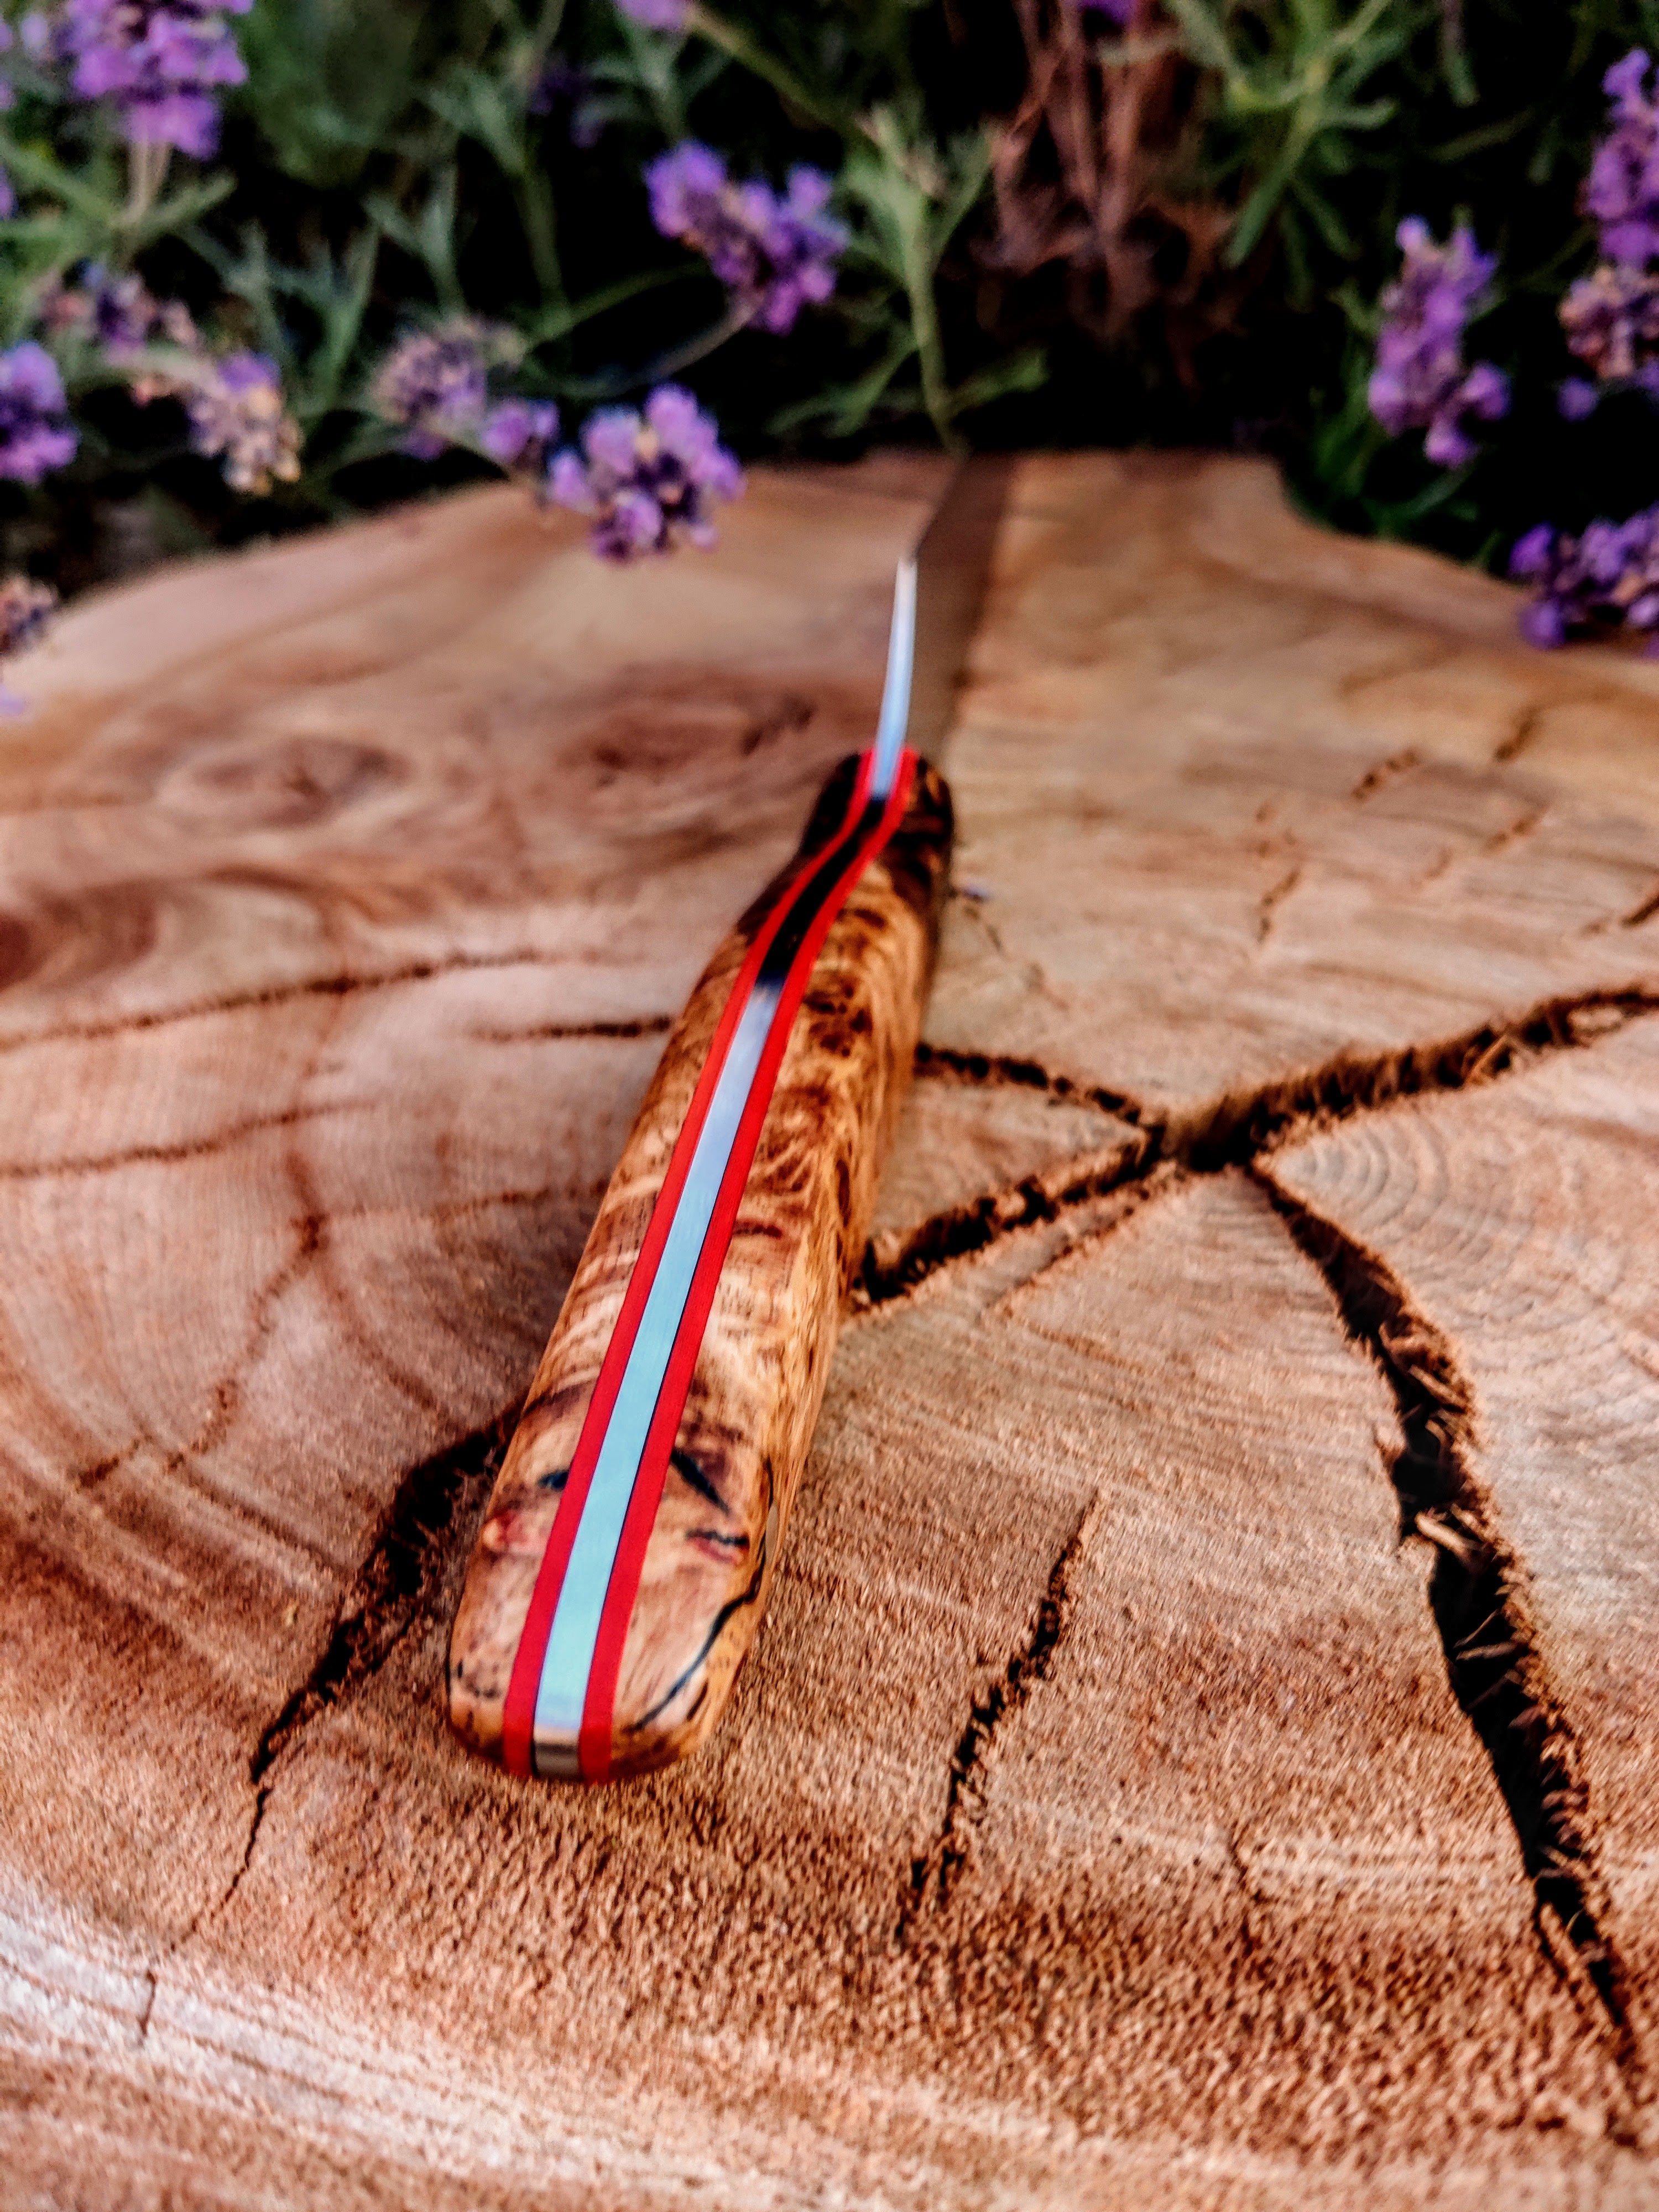 stainless cooks knife with irish oak burl